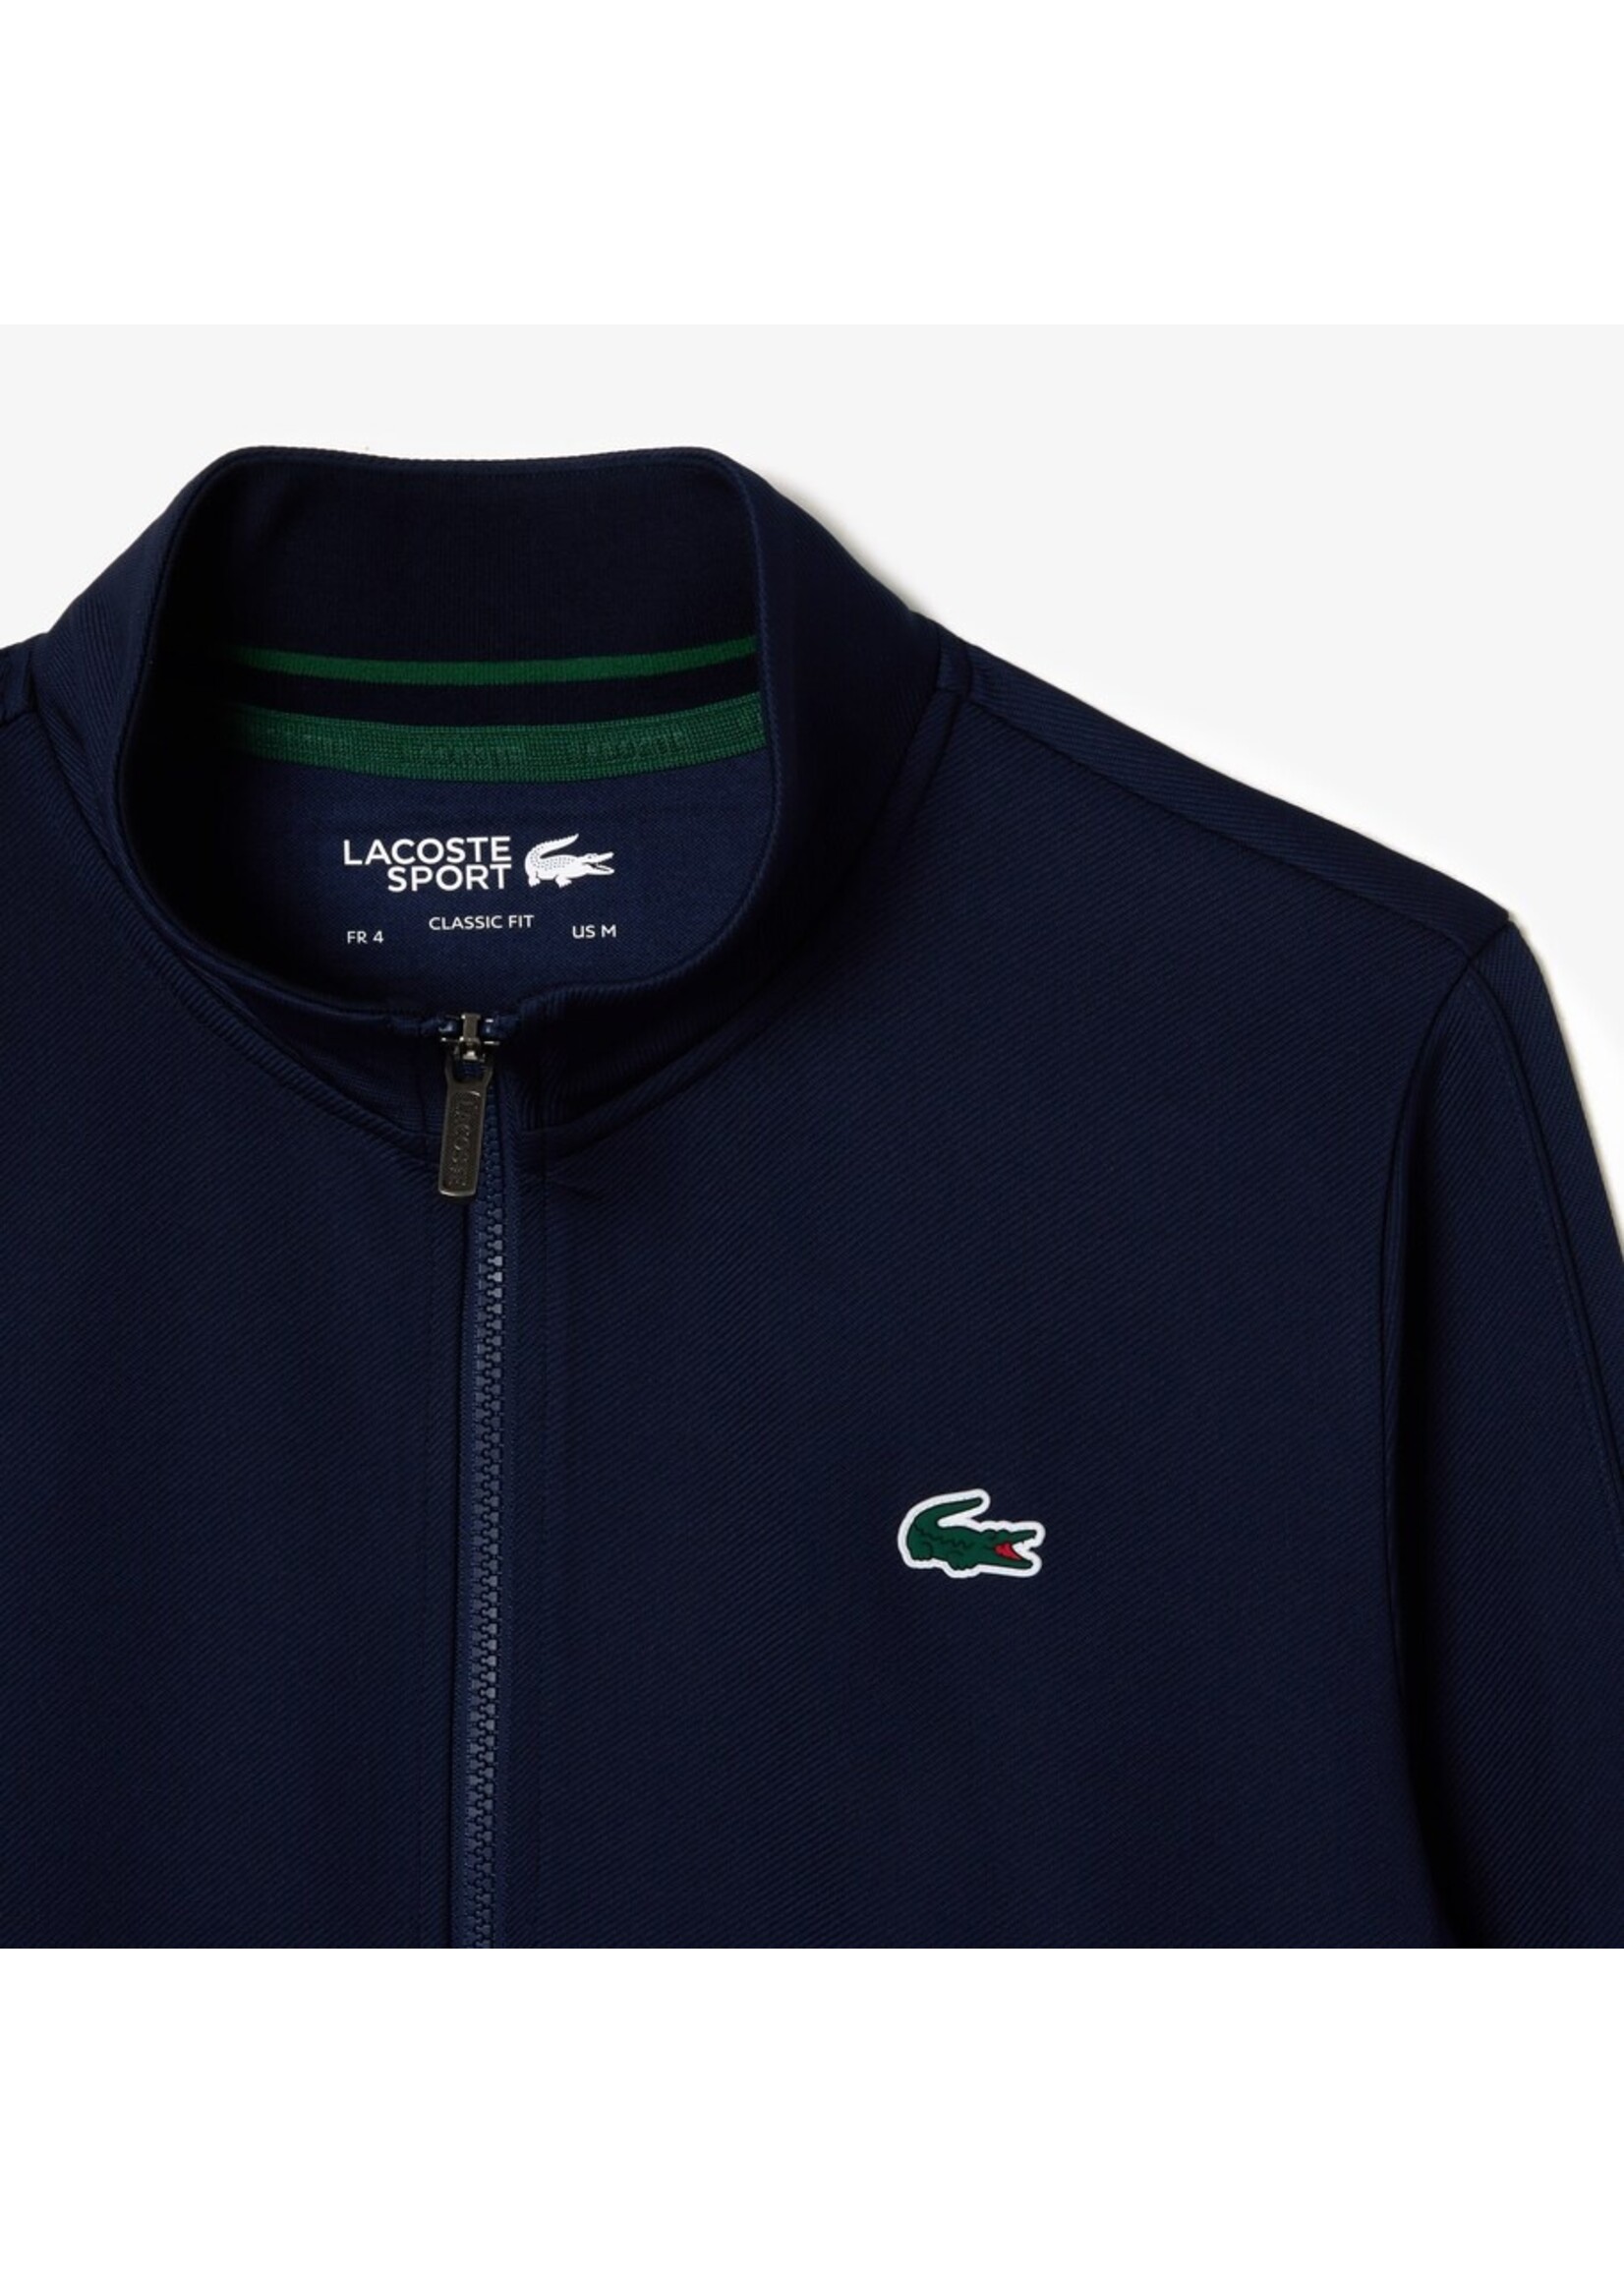 LACOSTE Men's Recycled Fiber Zipped Tennis Sweatshirt